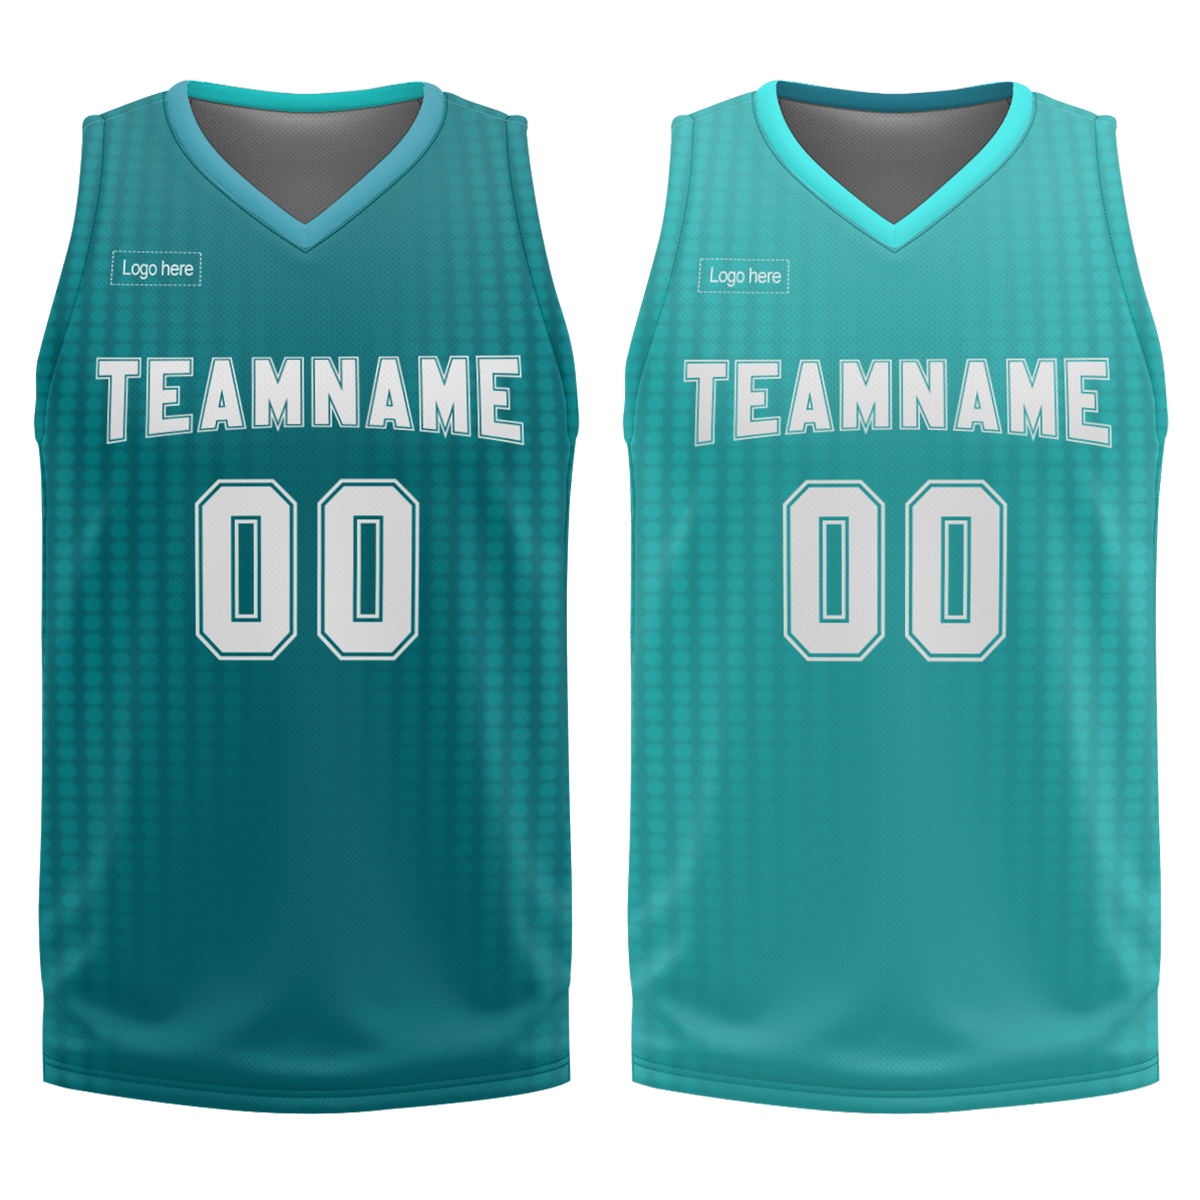 wholesale-professional-factory-sportswear-custom-print-on-demand-reversible-basketball-jersey-at-cj-pod-4